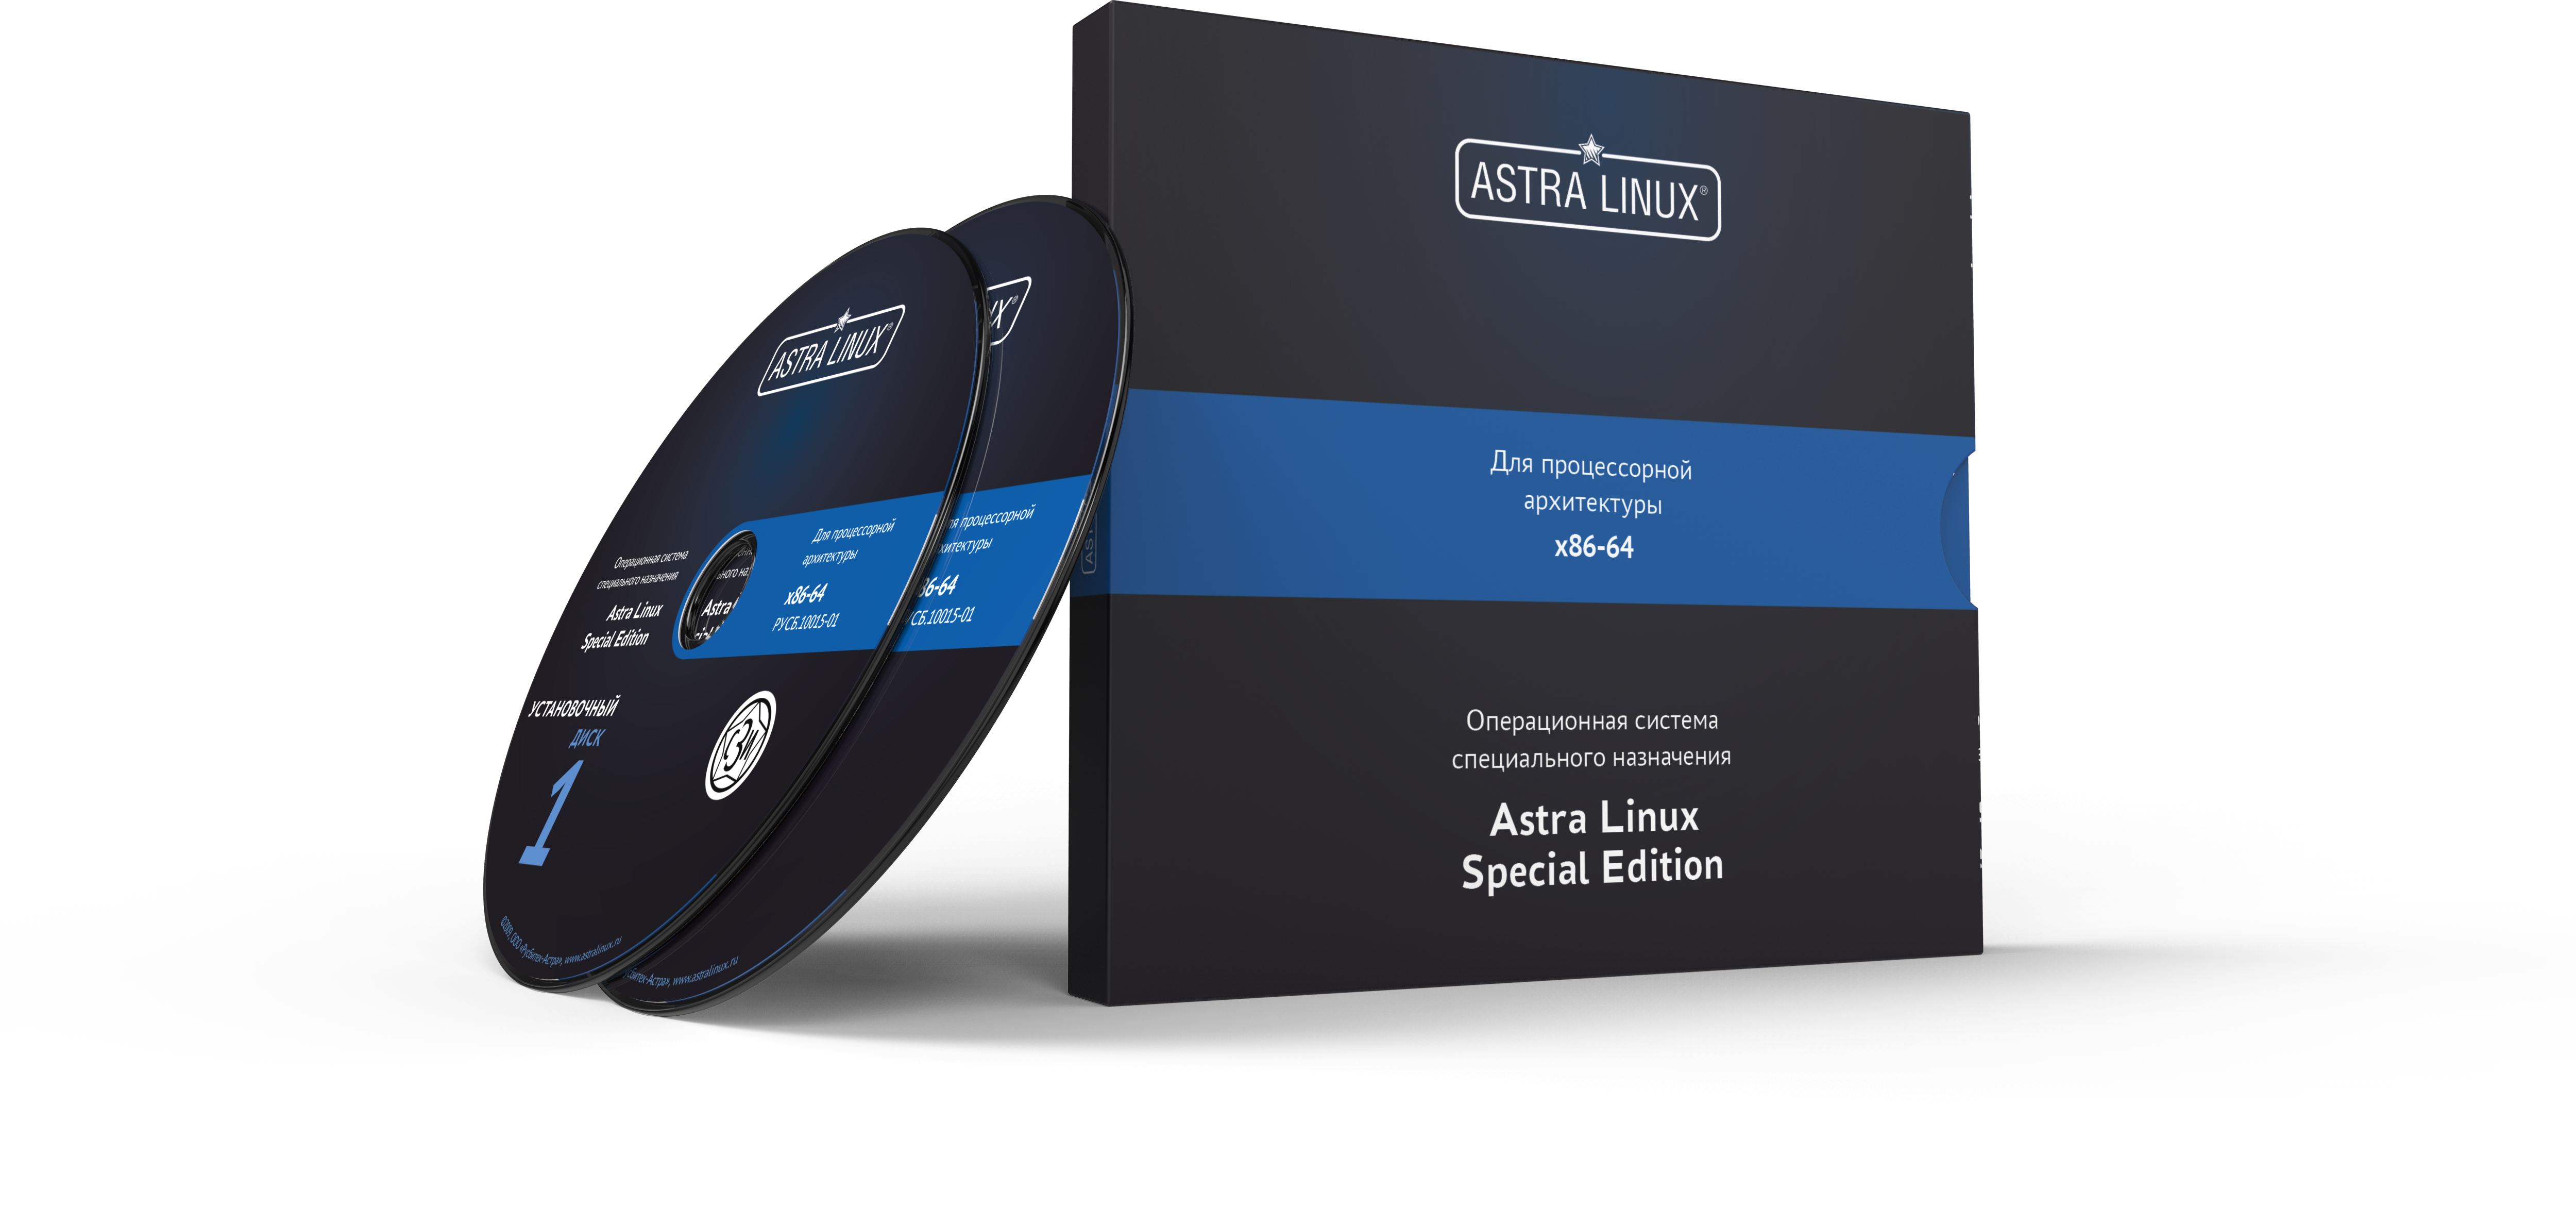 Astra Linux Special Edition 1.7 - Воронеж, РУСБ.10015-01 (ФСТЭК), электронный, без огр. срока, ТП "Стандарт" 36 мес.